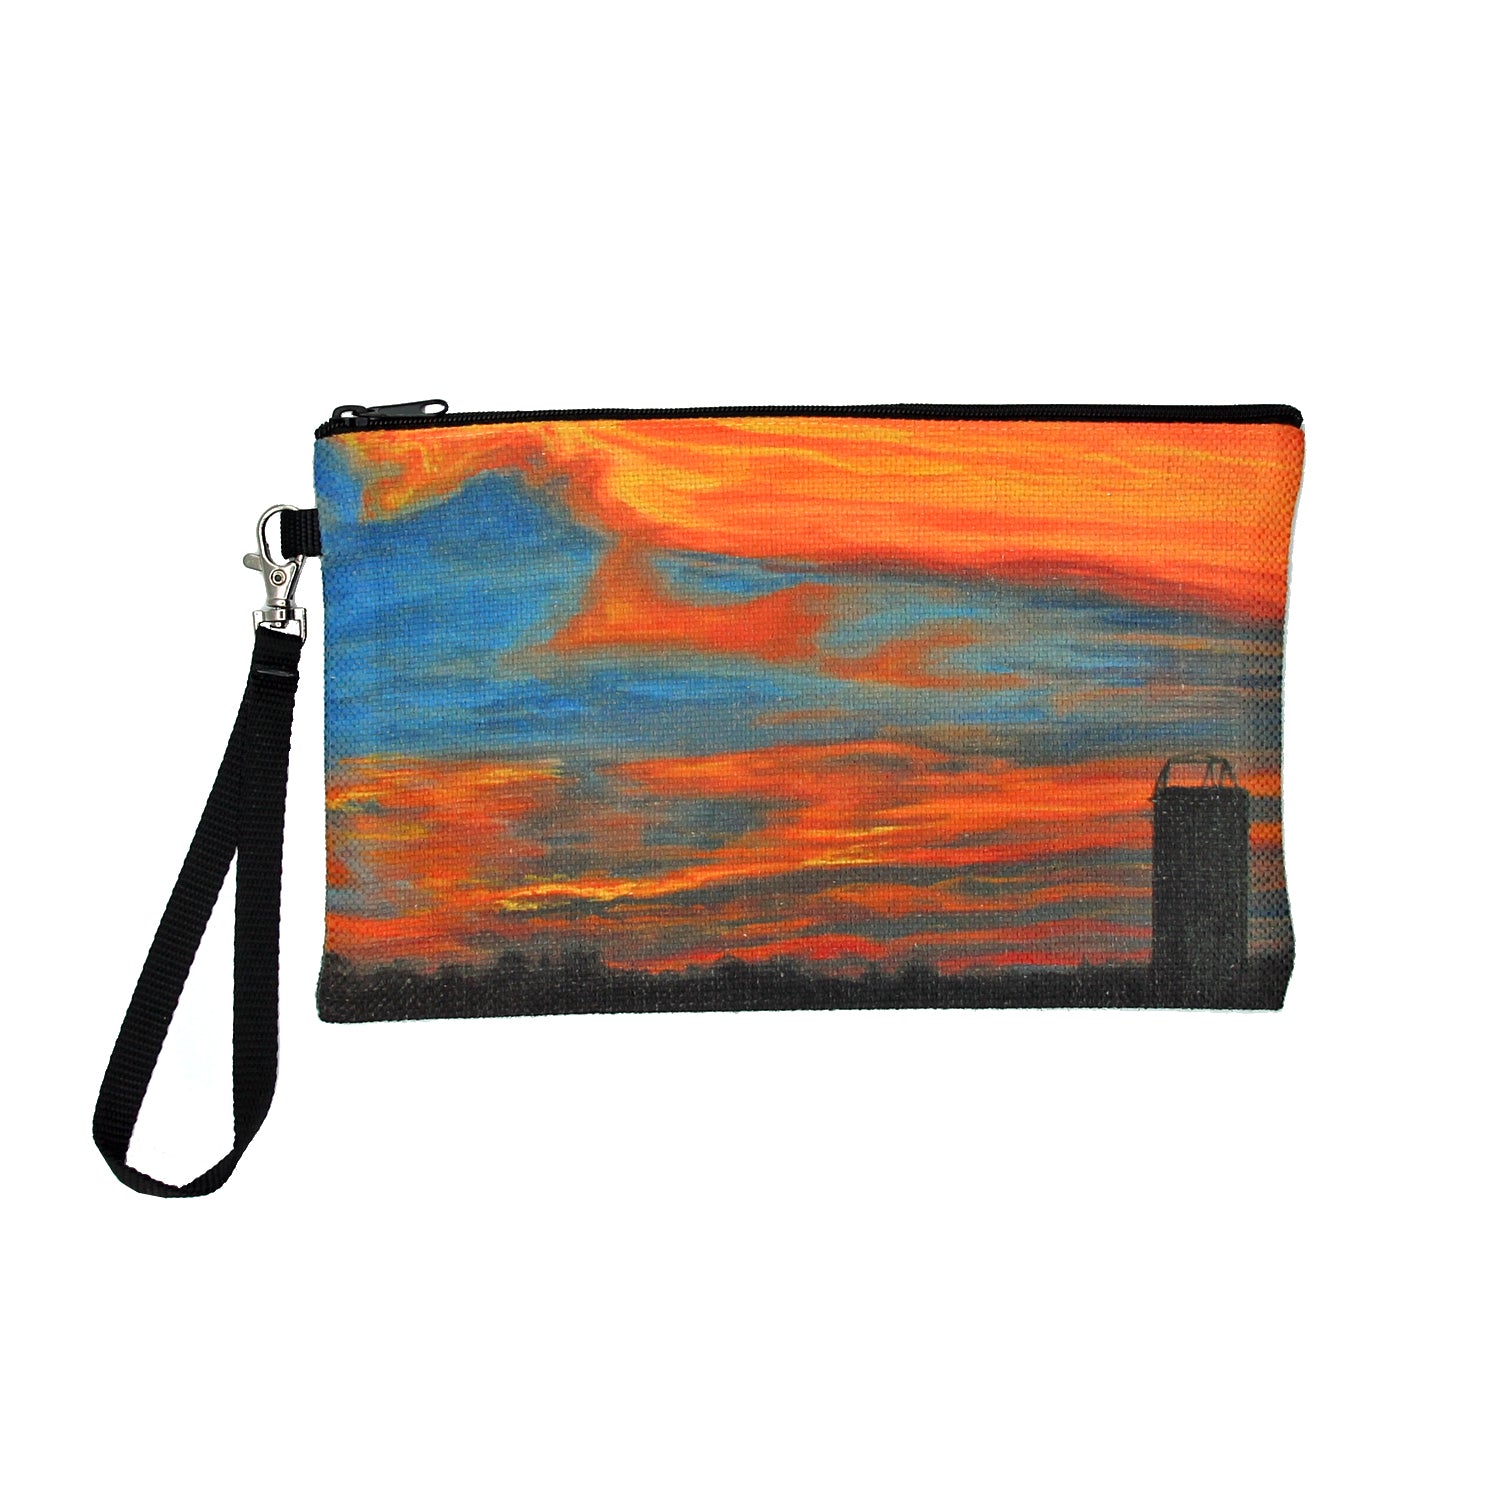 Aldine Sunset Clutch Bag